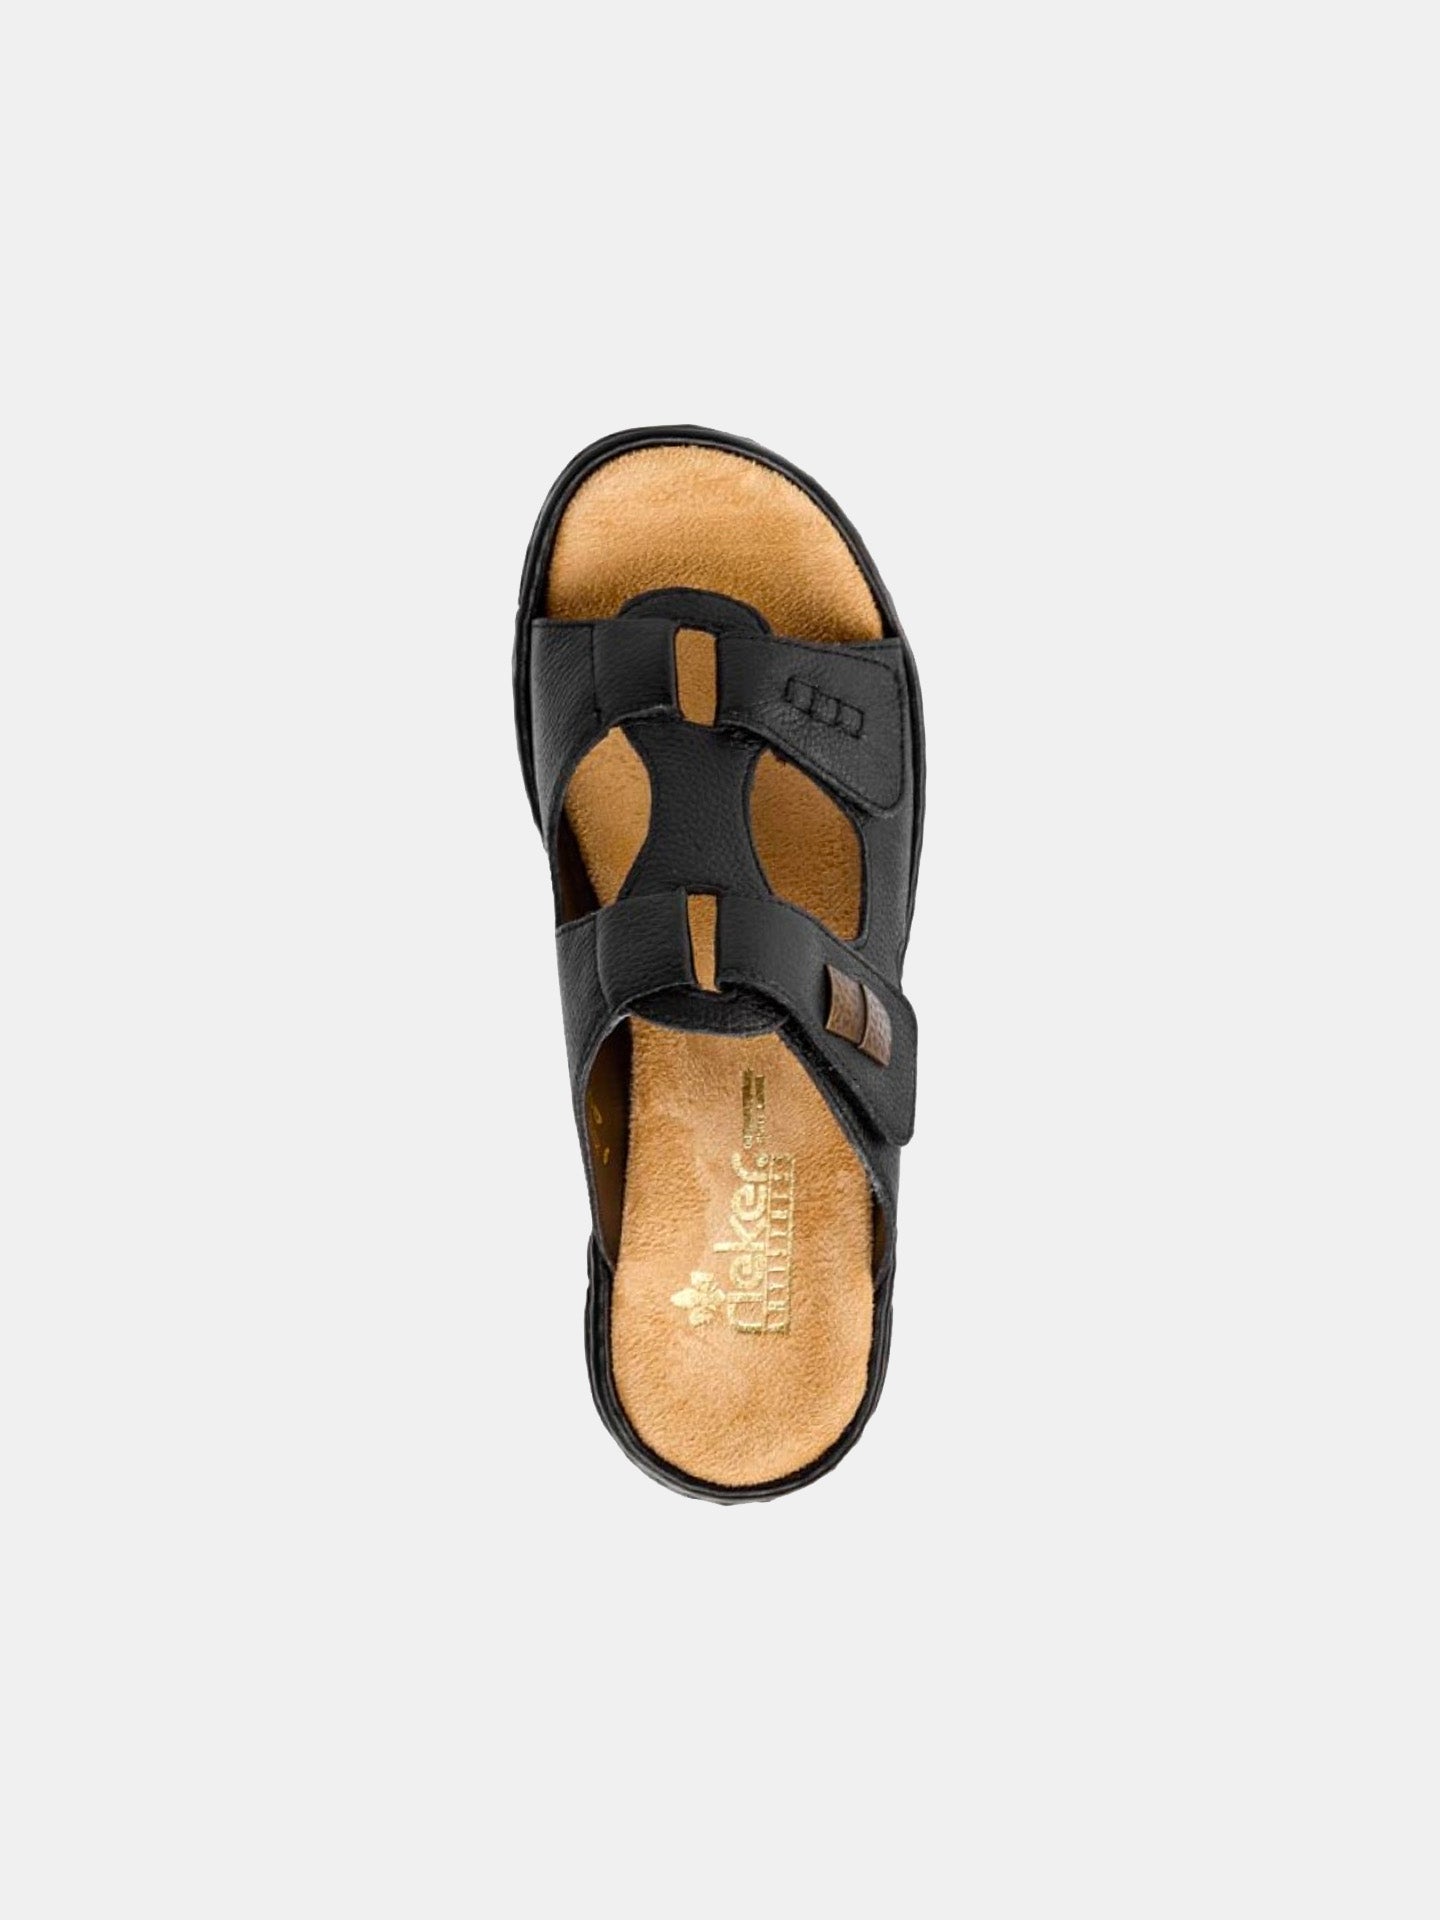 Rieker 65958-00 Women's Slider Sandals